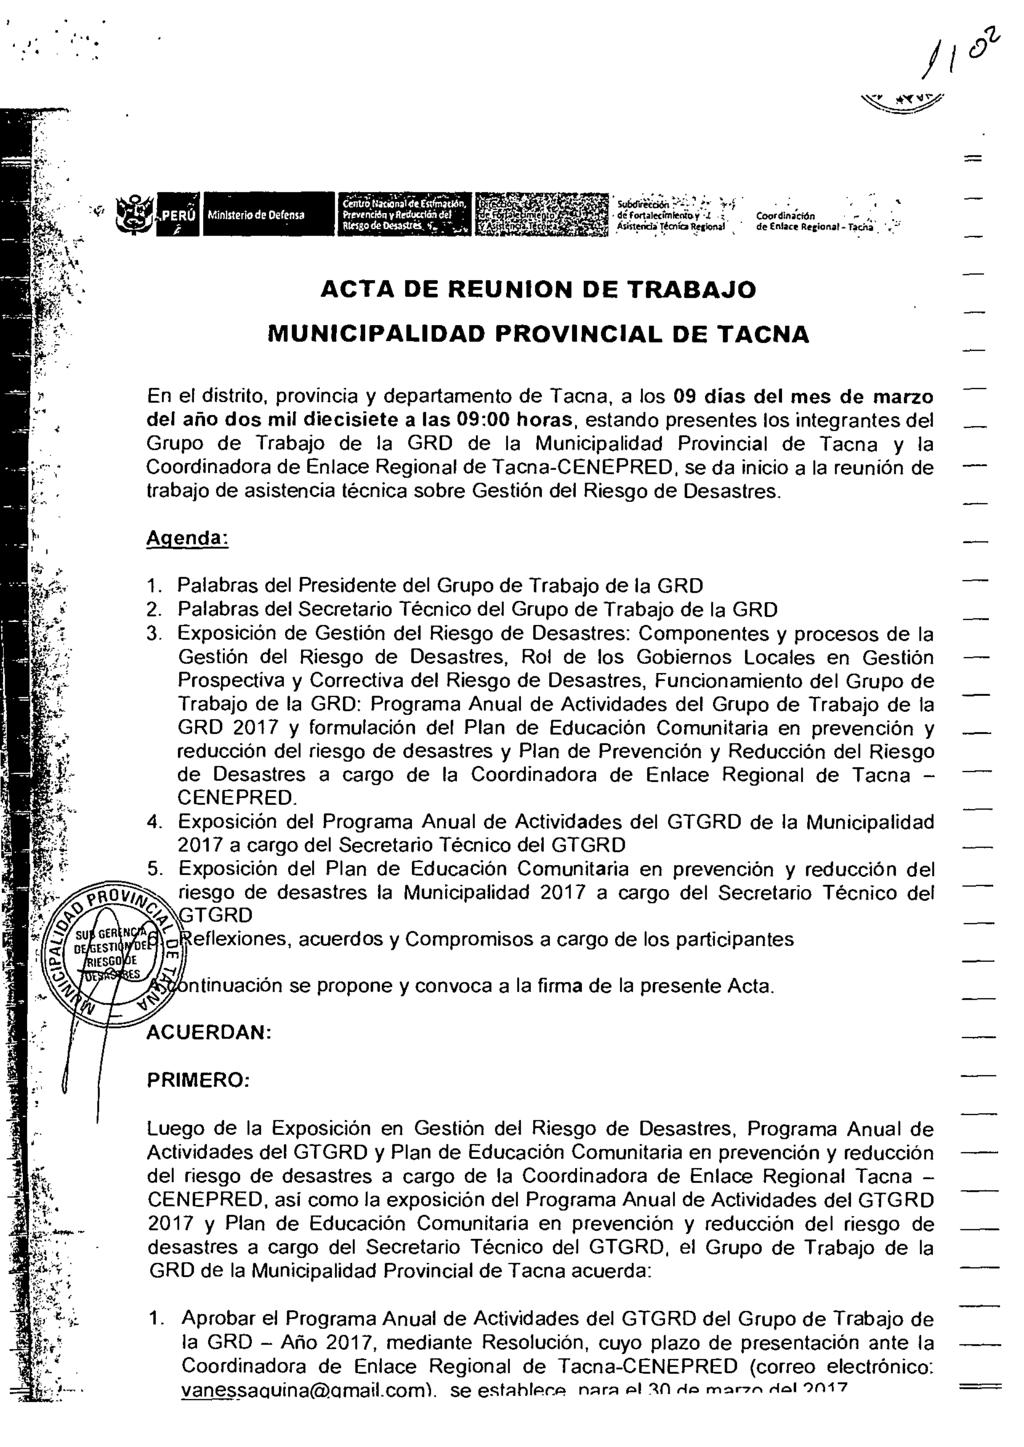 jot2# PERU Mrnlsteriode Defens 1uciedtGtin. T ACTA '14 1 lii 1 [.